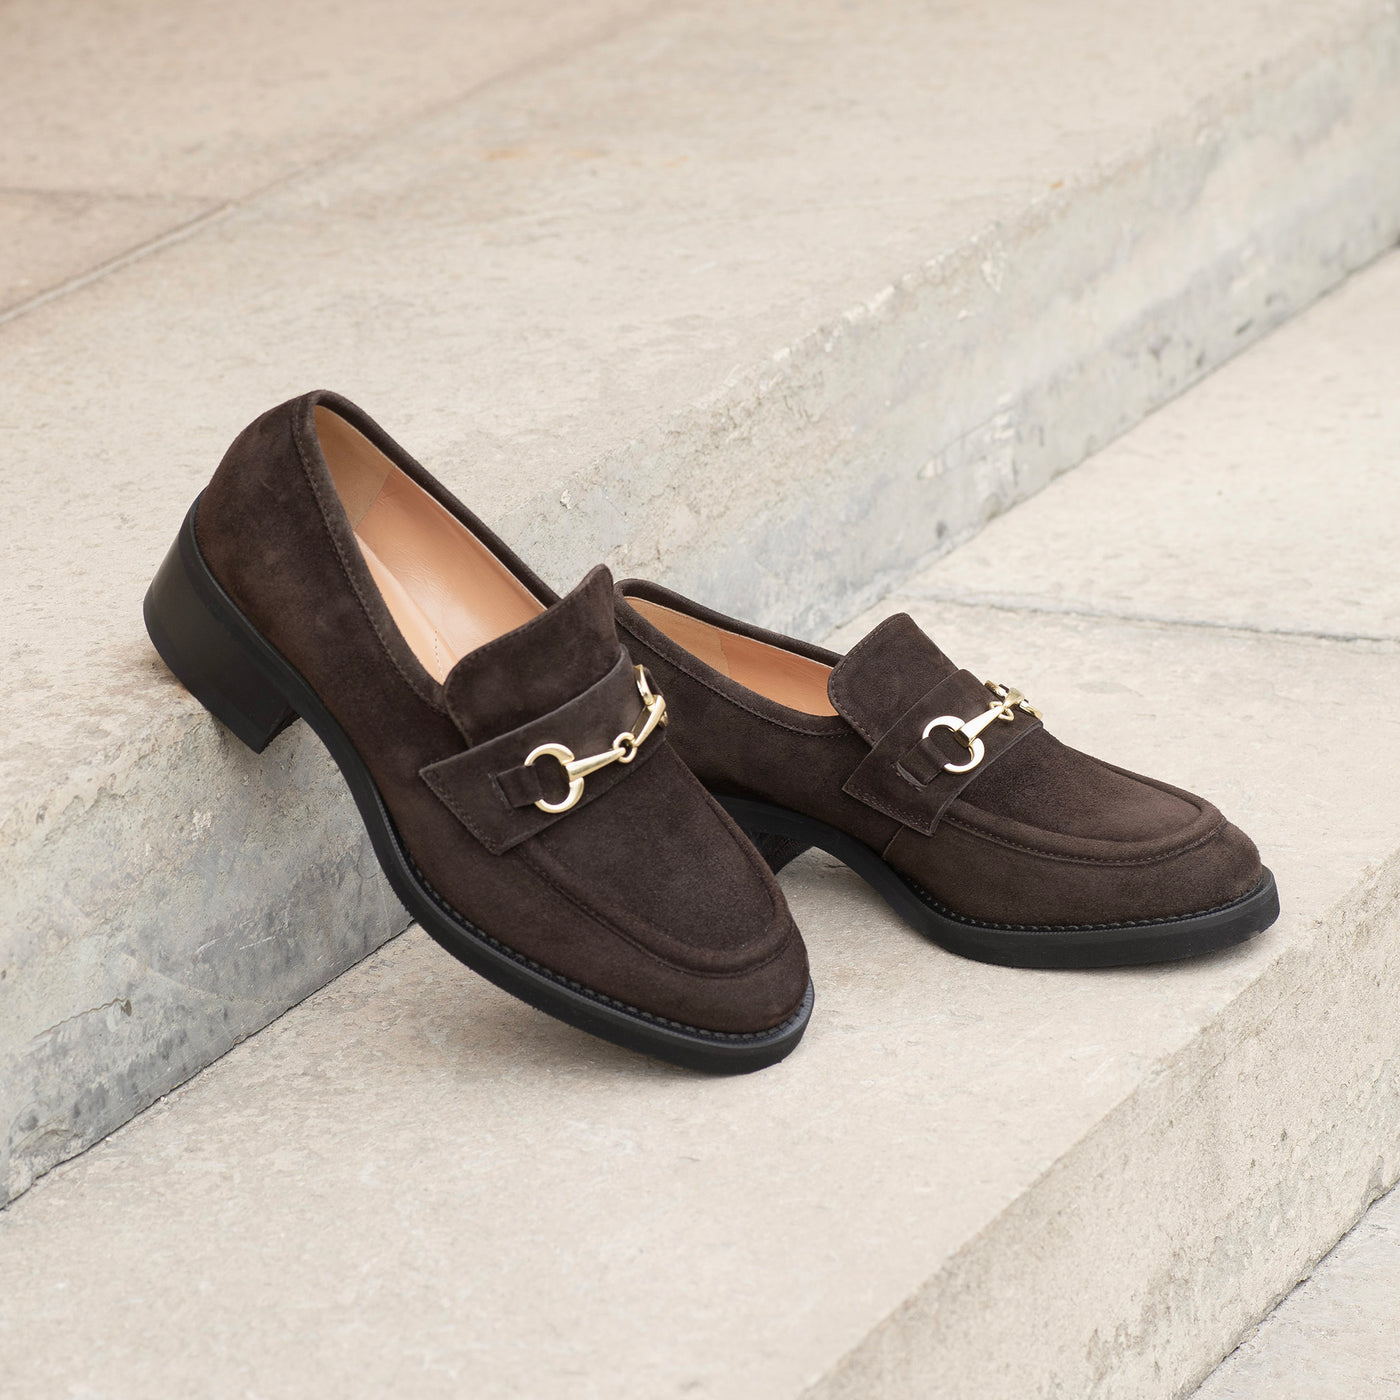 Brown suede loafers with heel and horsebit